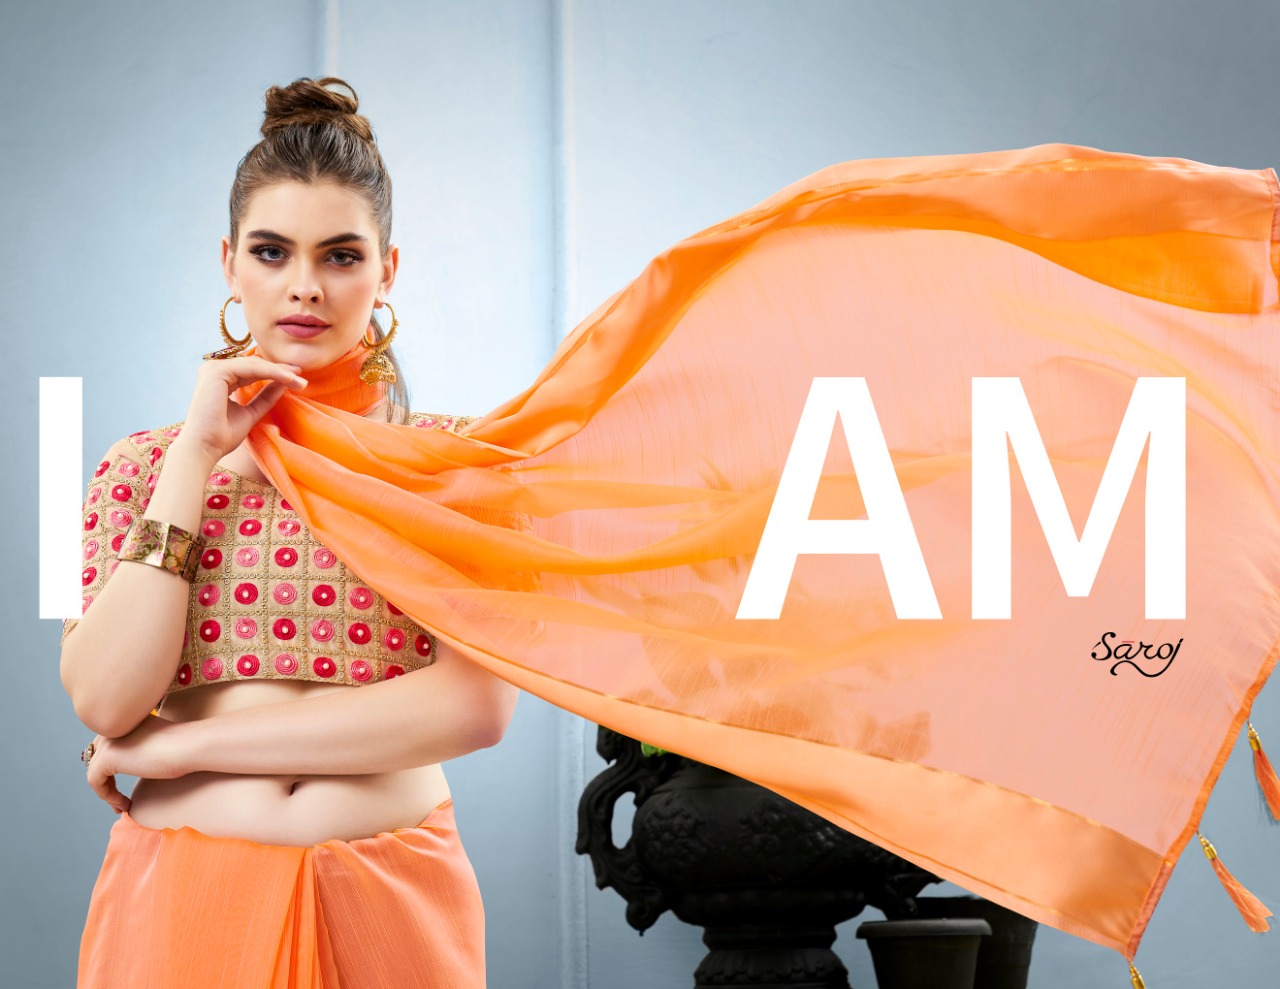 Saroj premium silk simple casual rich look sarees collection